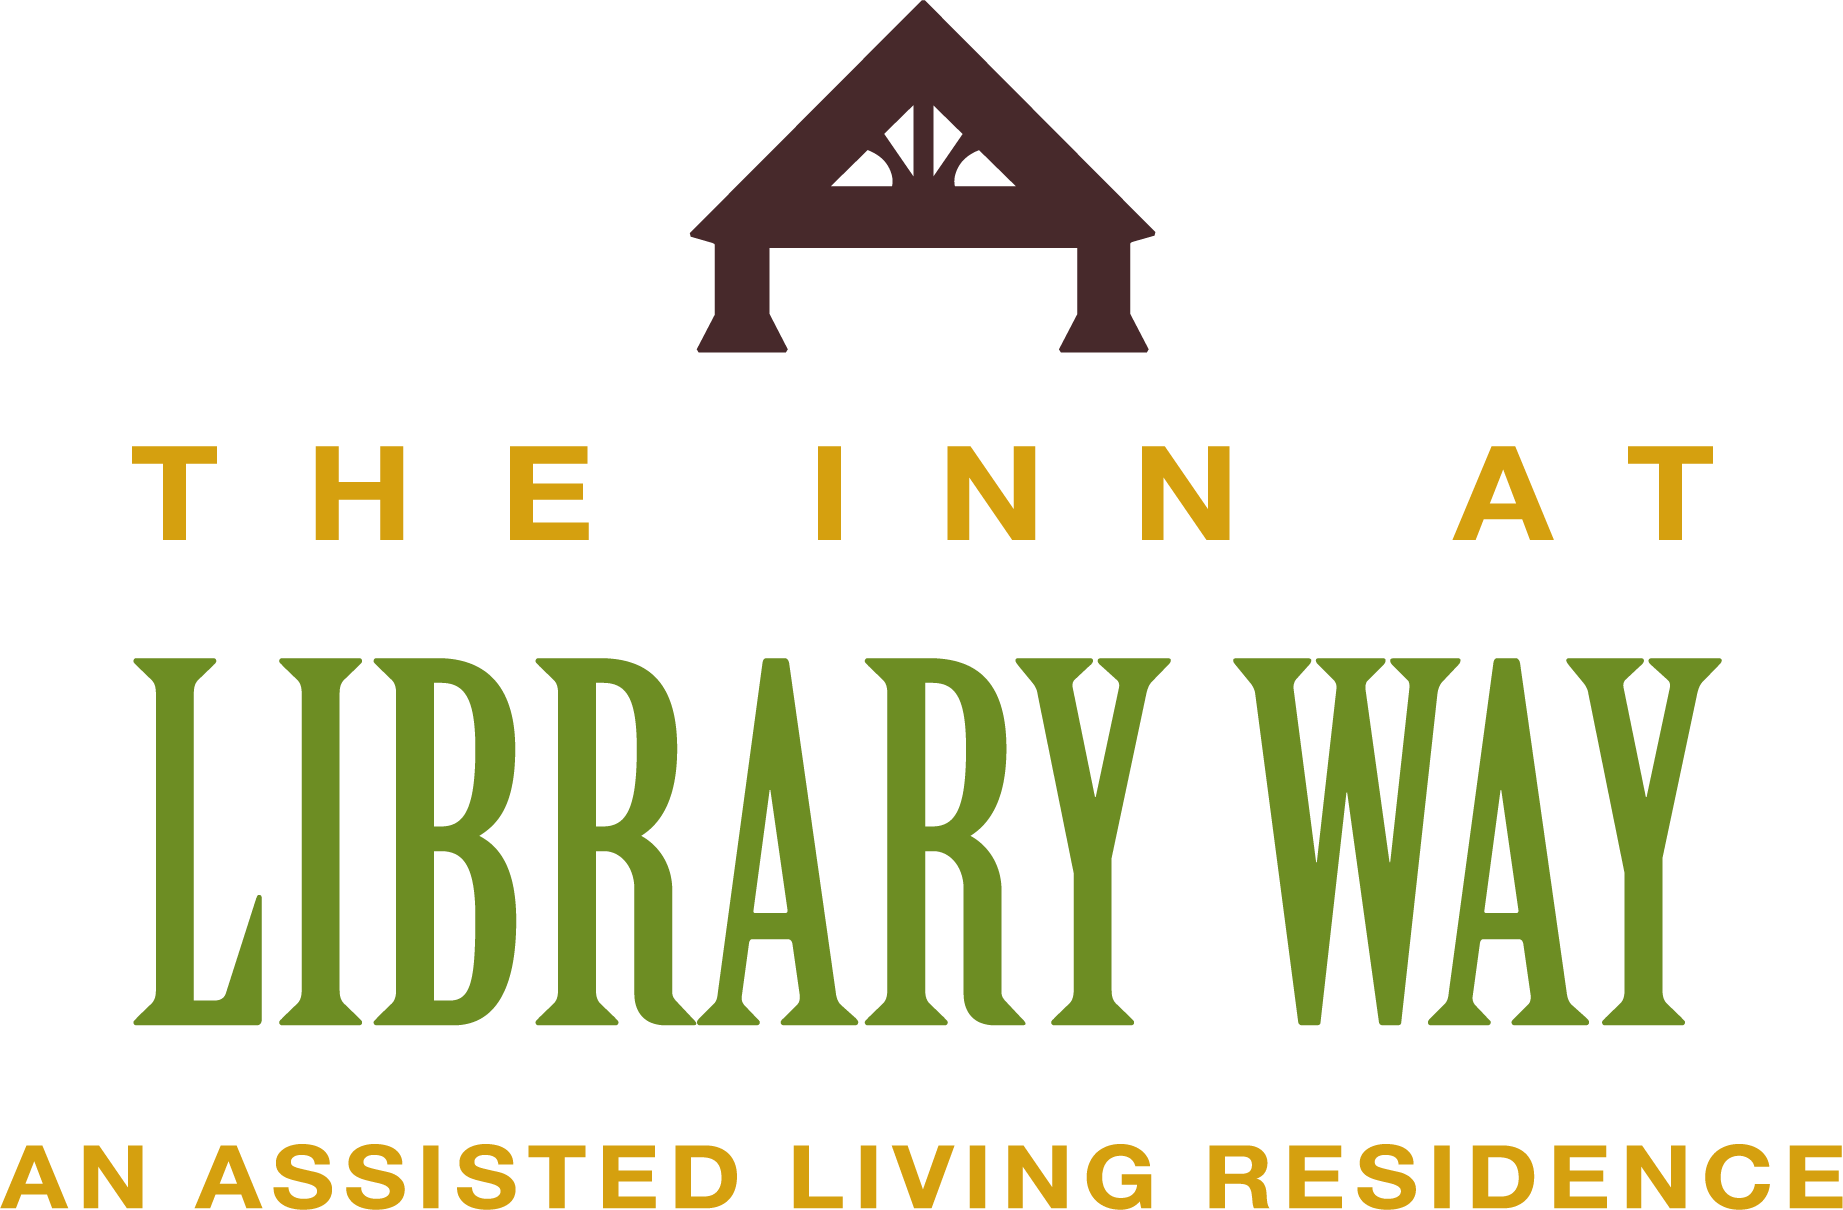 Assisted Living at The Inn At Library Way